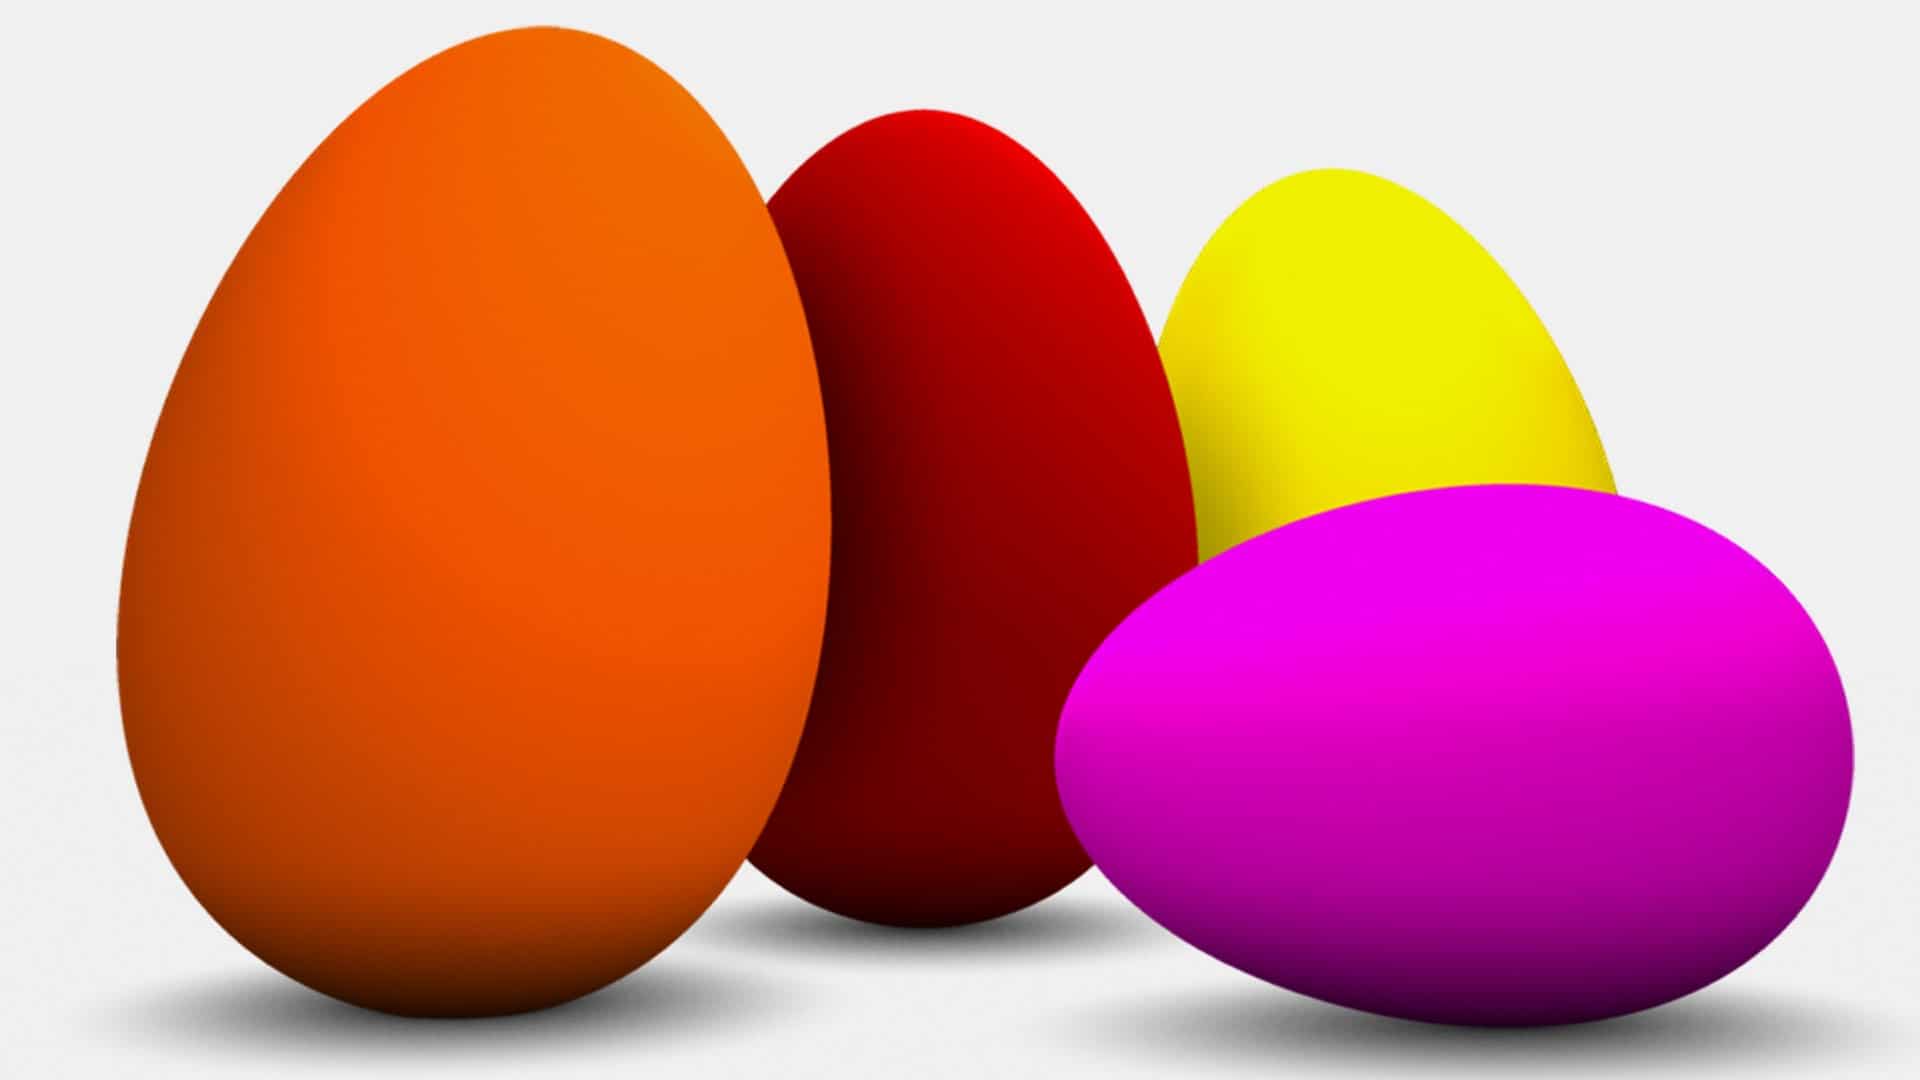 surprise egg videos for kids